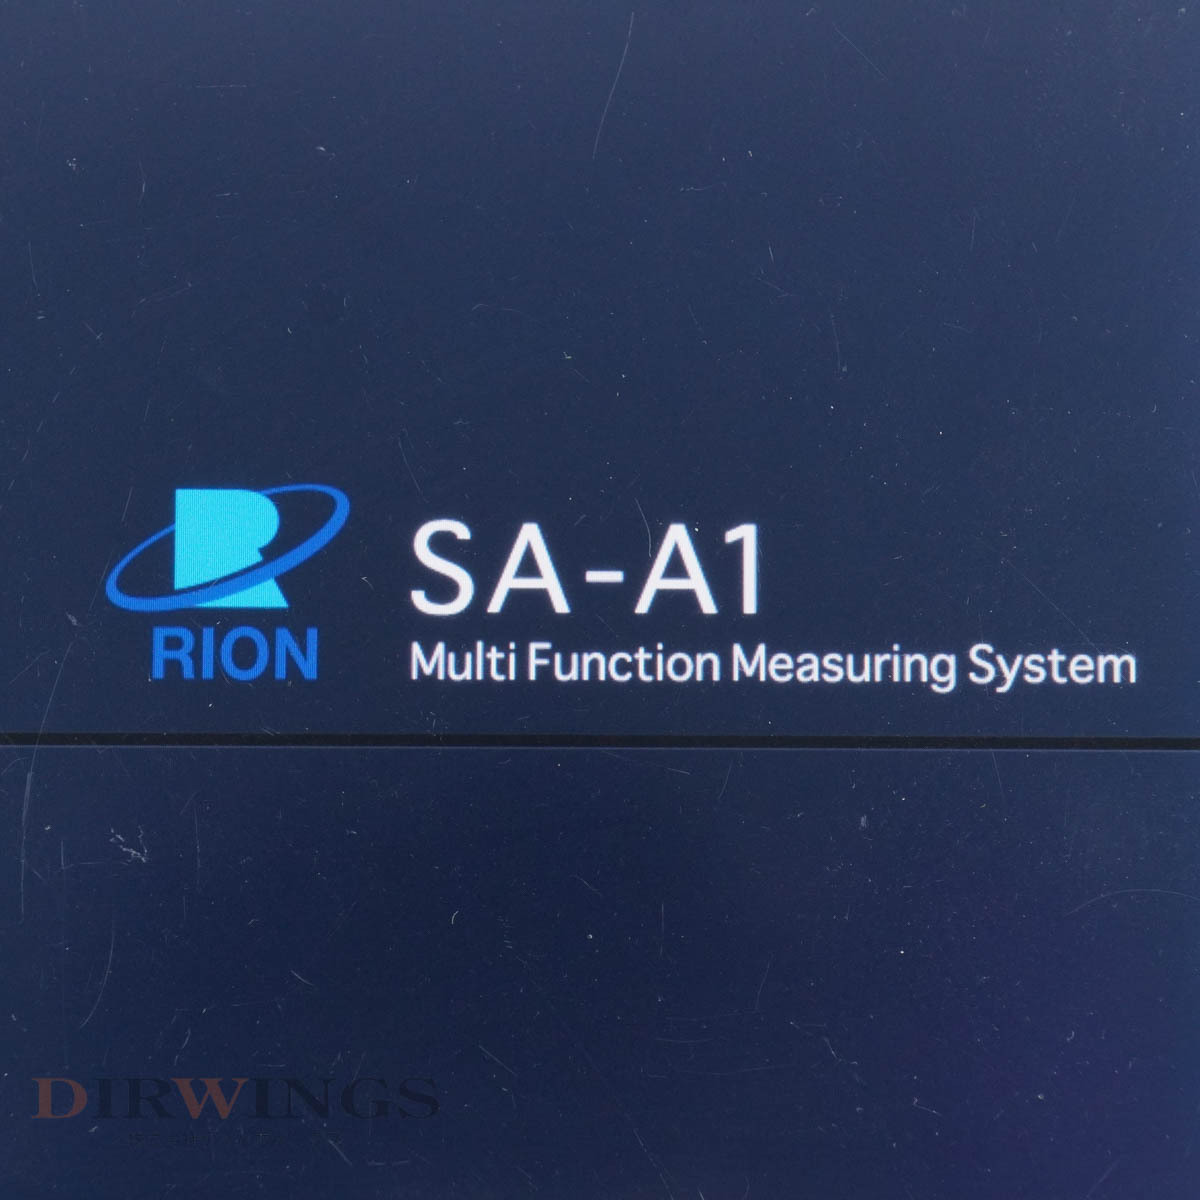 [JB]保証なし SA-A1 SA-A1B4 RION リオン Multi-function Measuring System Platform 多機能計測システム 計測用タブレット..[05890-0182]の画像5